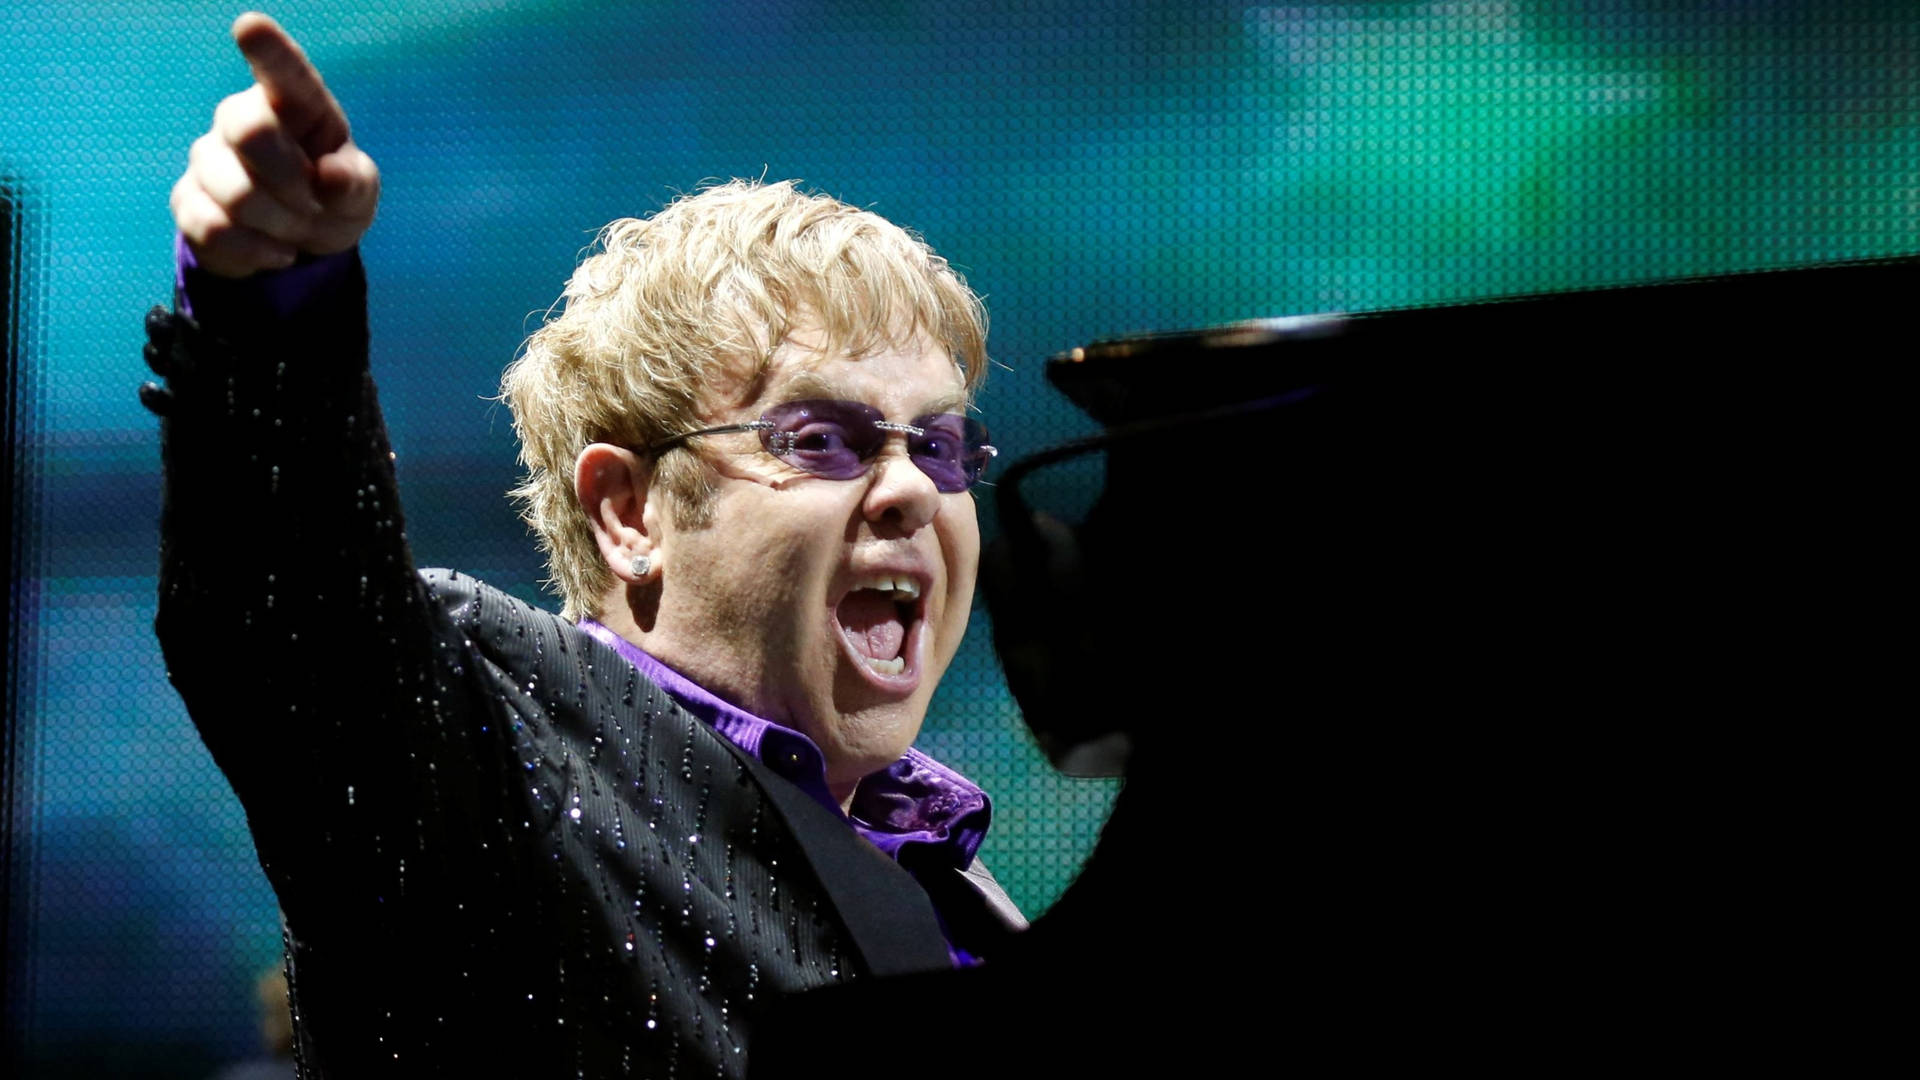 Elton John Pop Rock Concert Background